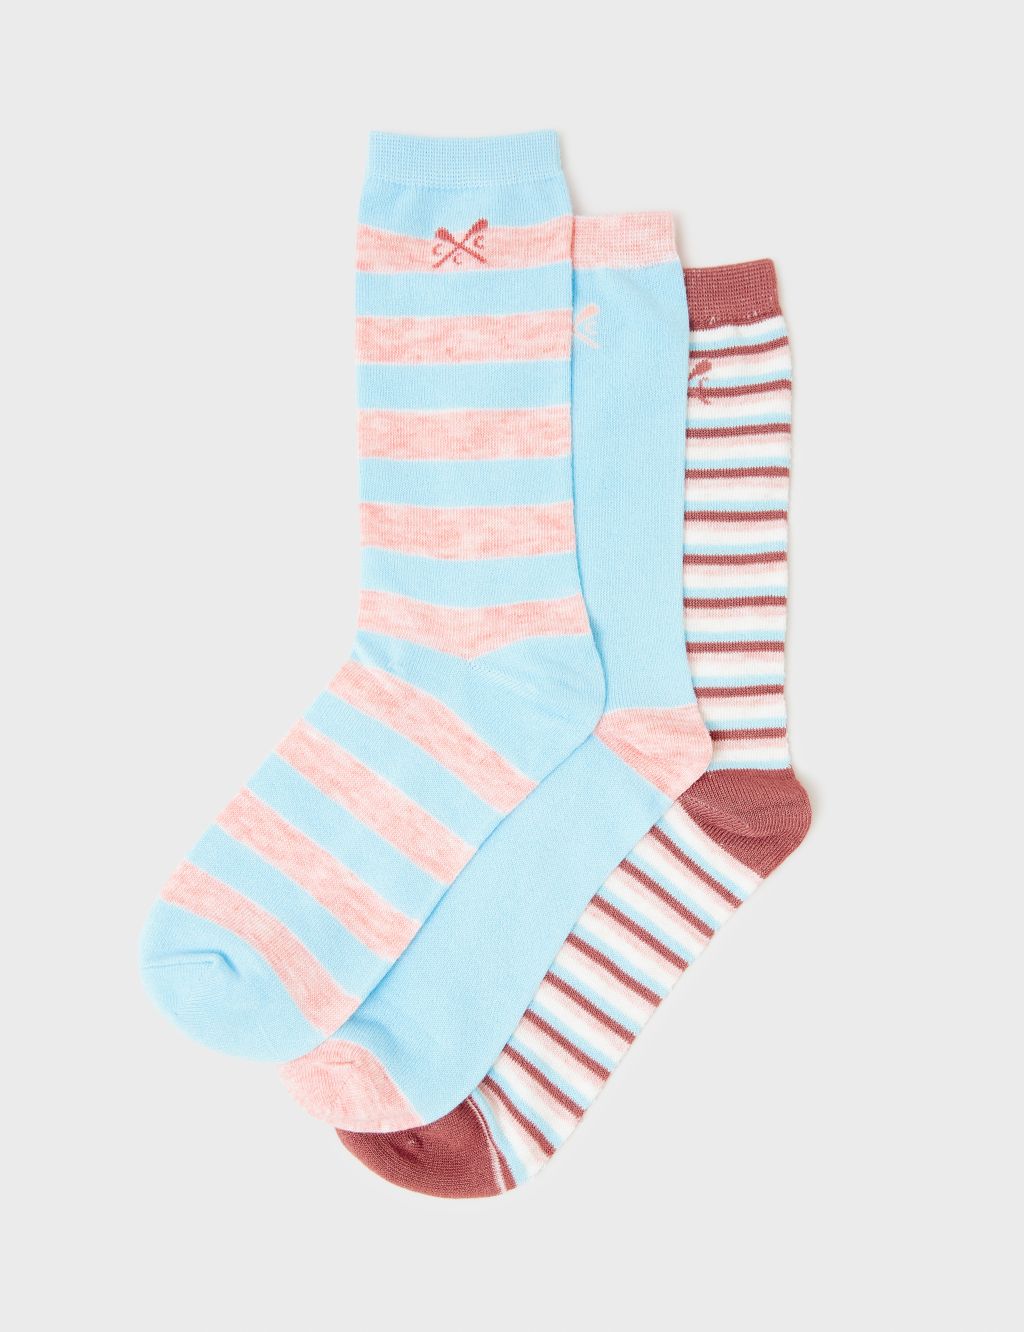 3pk Striped & Plain Ankle High Socks image 1